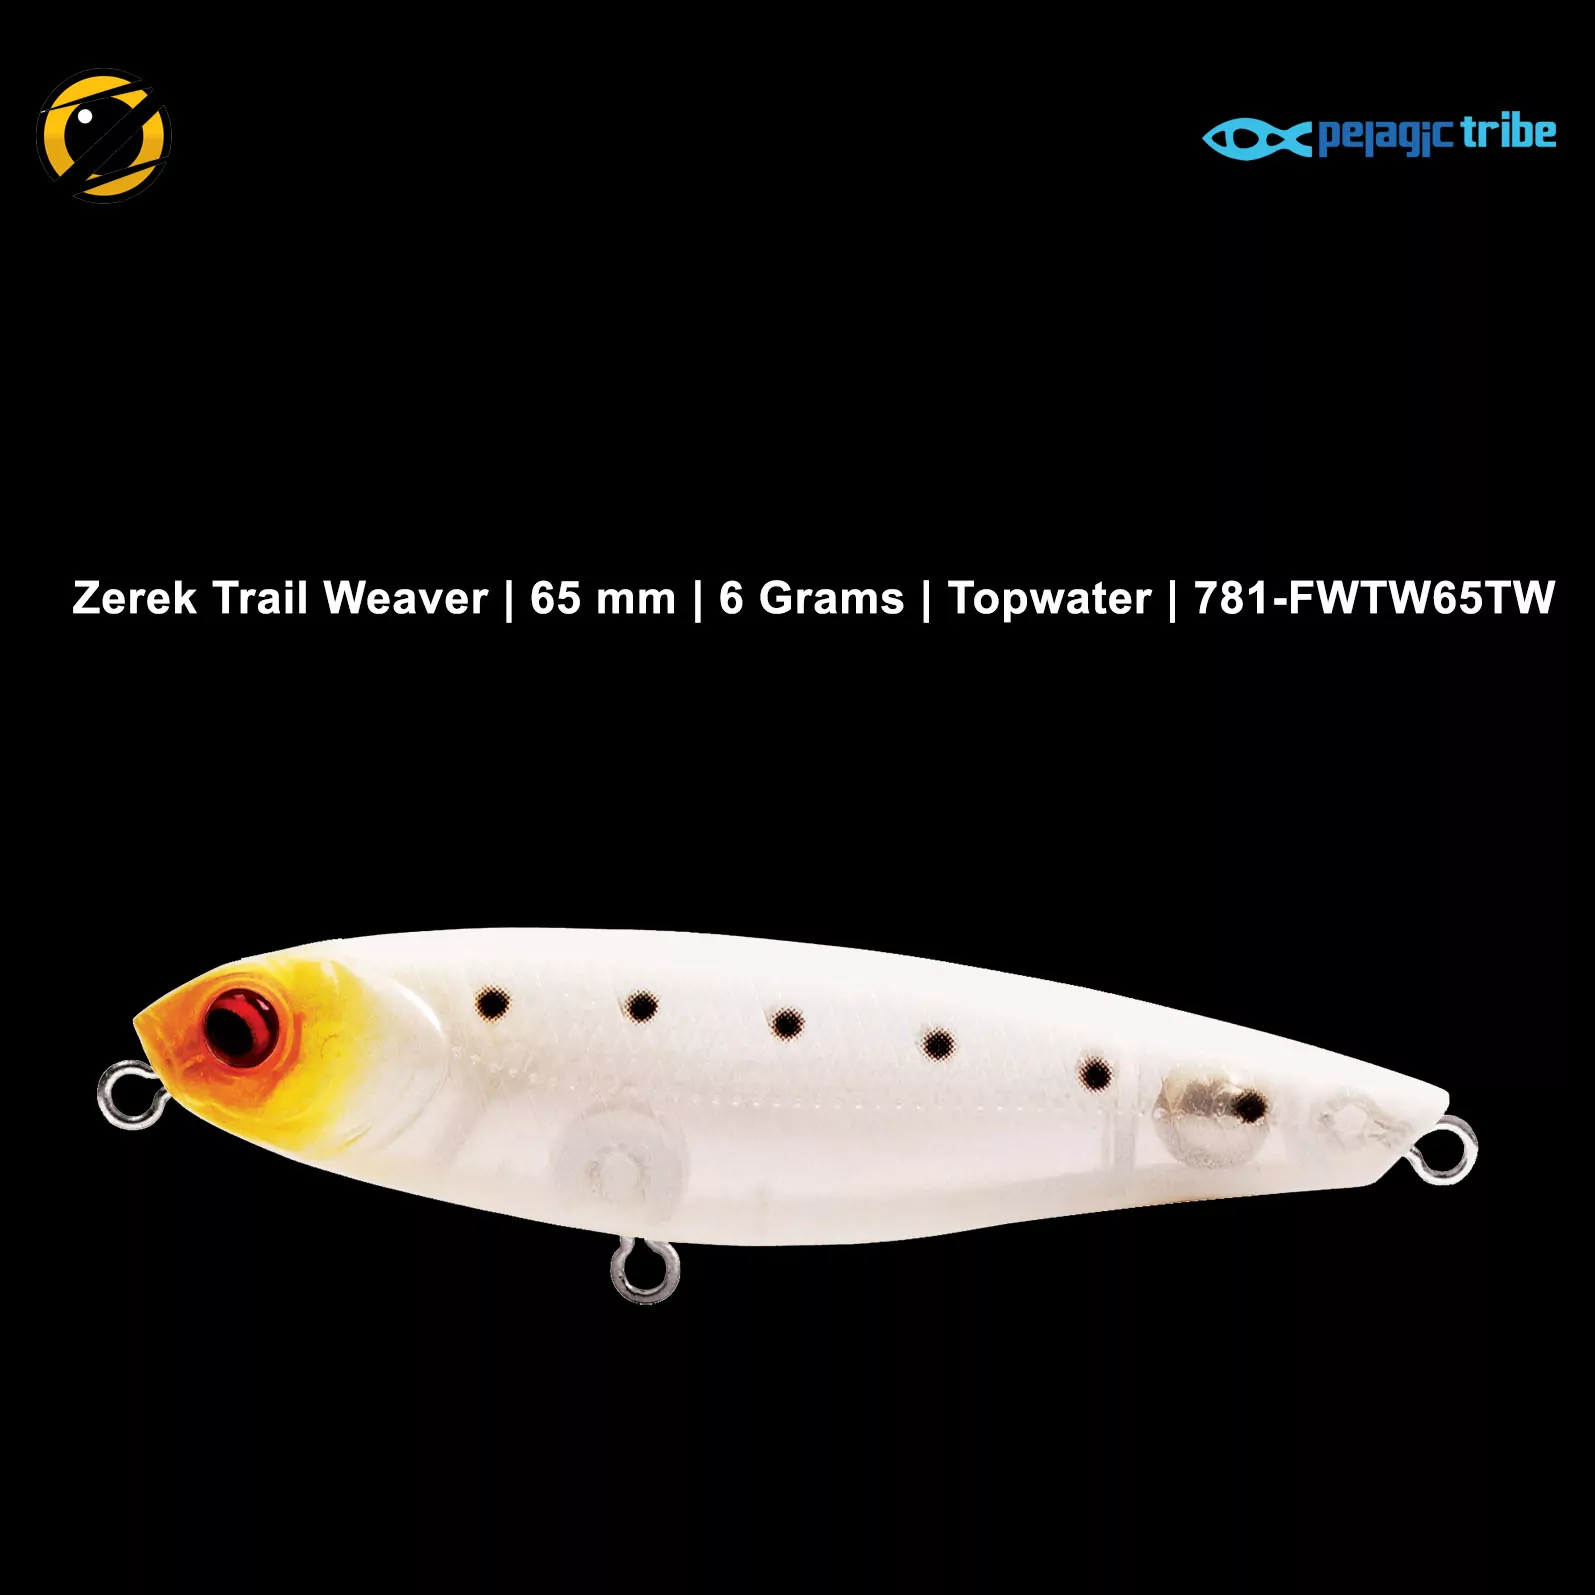 Zerek Trail Weaver, 65 mm, 6 Grams, Topwater